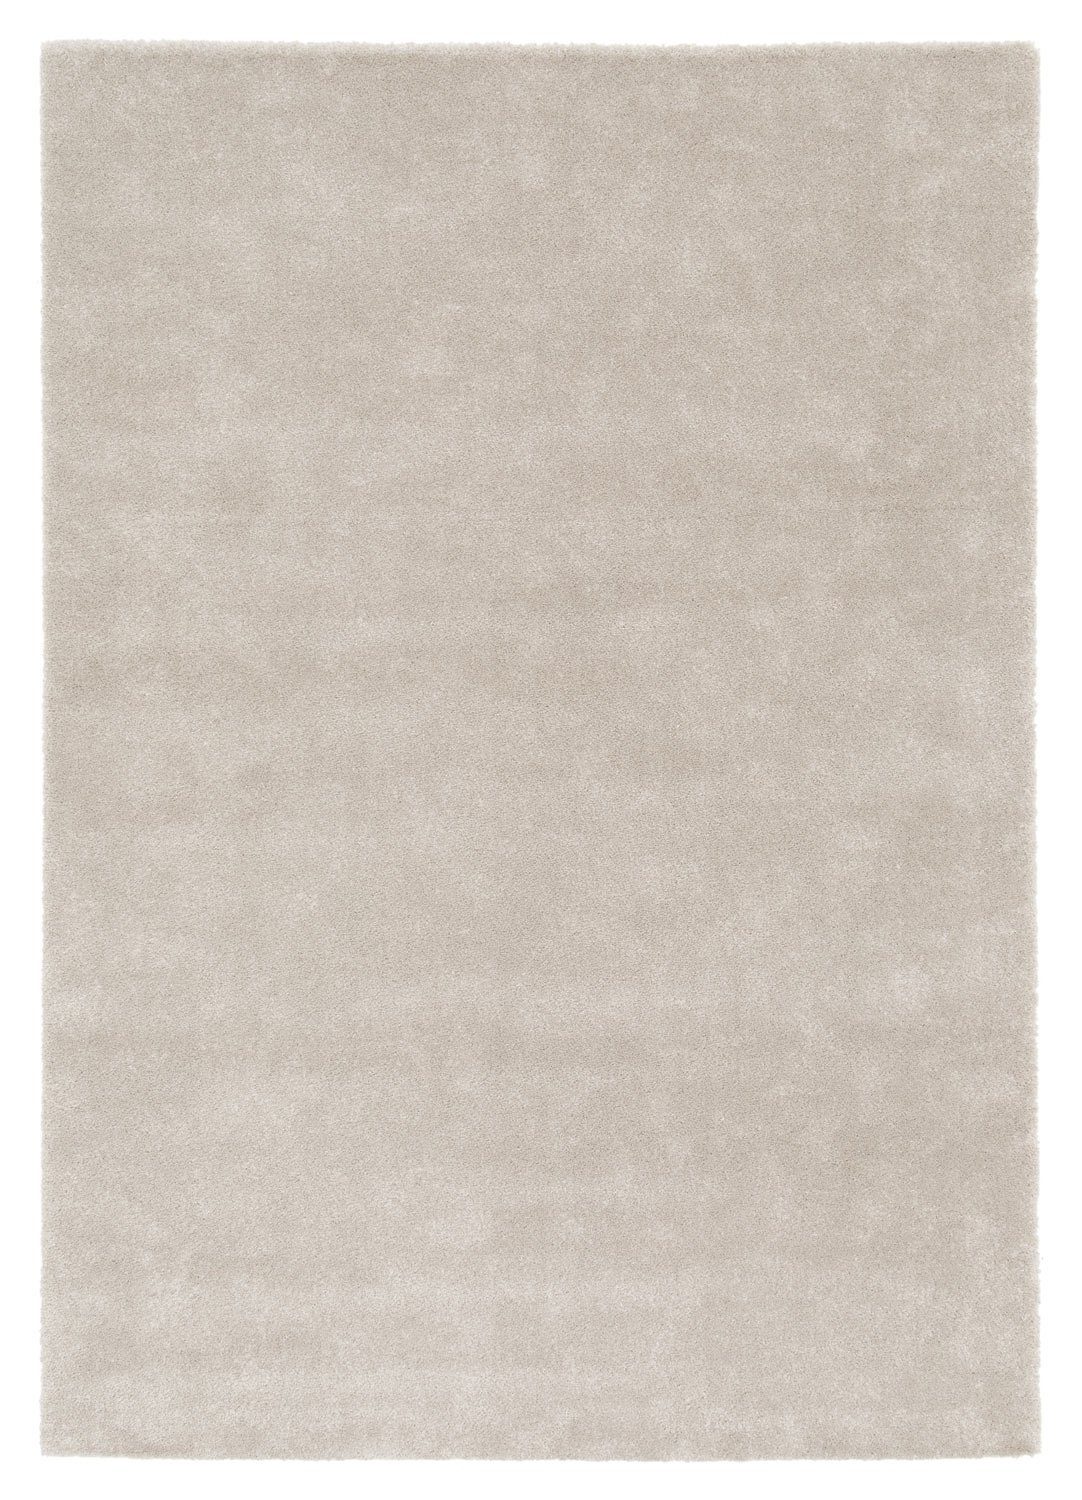 Teppich MOON, Polypropylen, Beige, 80 x 150 cm, Unifarben, Balta Rugs, rechteckig, Höhe: 17 mm